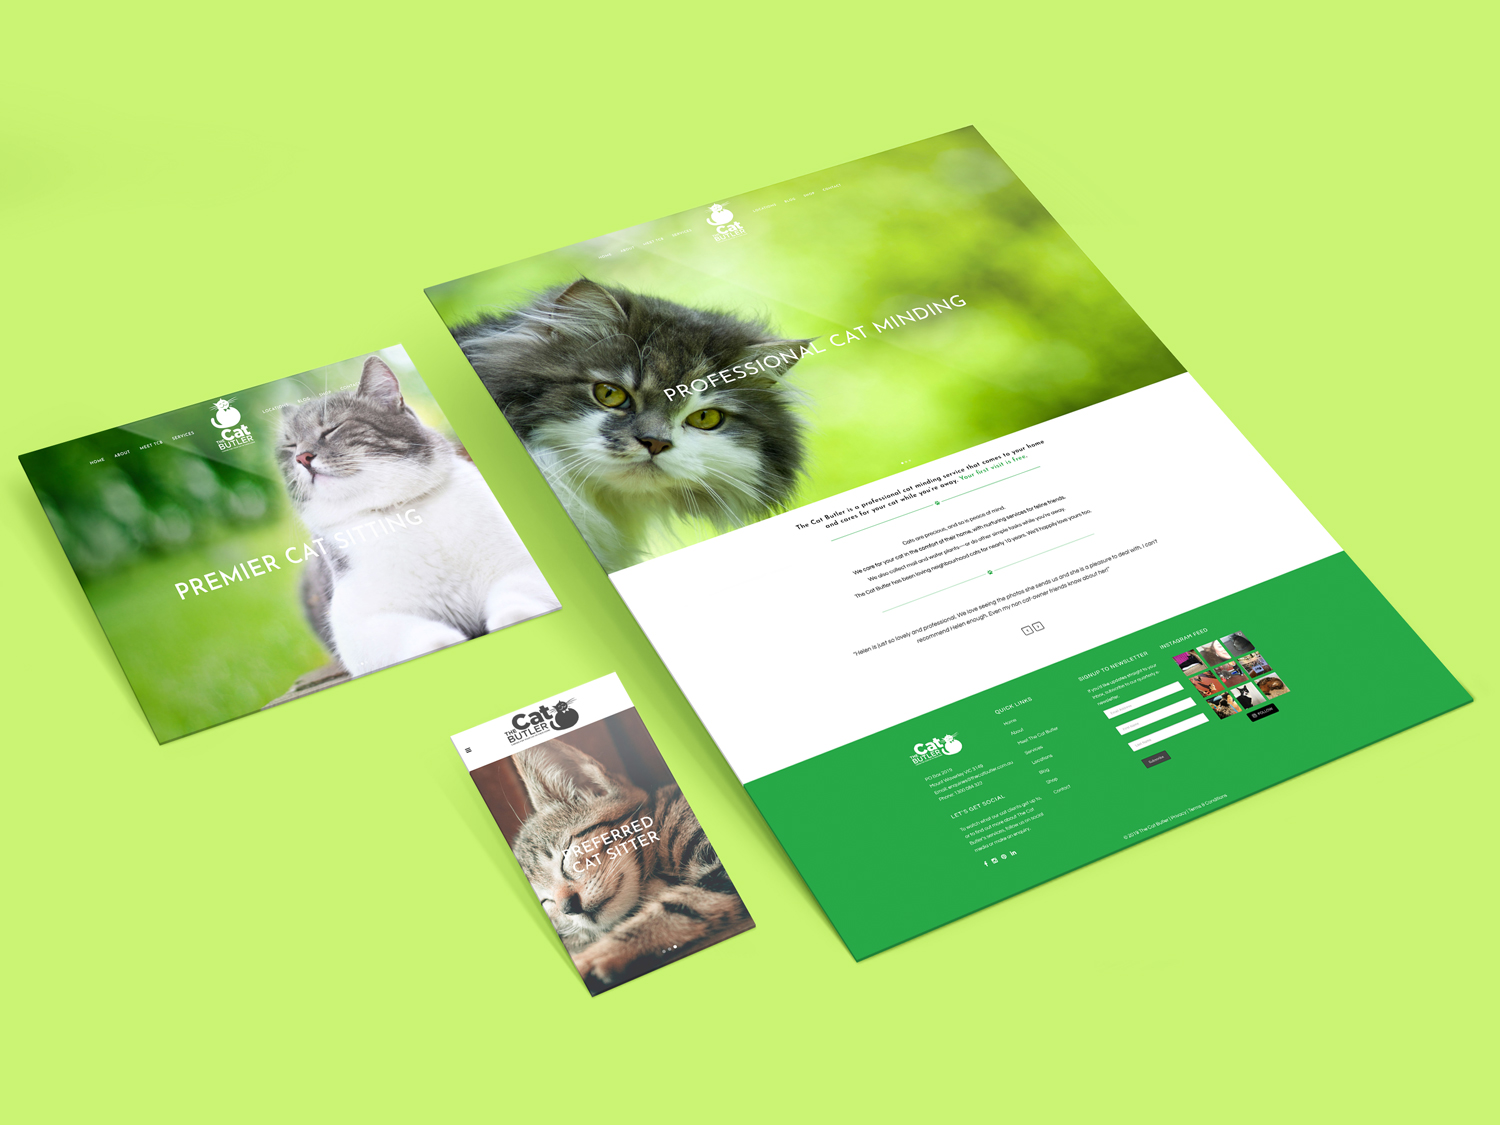 Purple Possum Design – Web Design Wangaratta – The Cat Butler